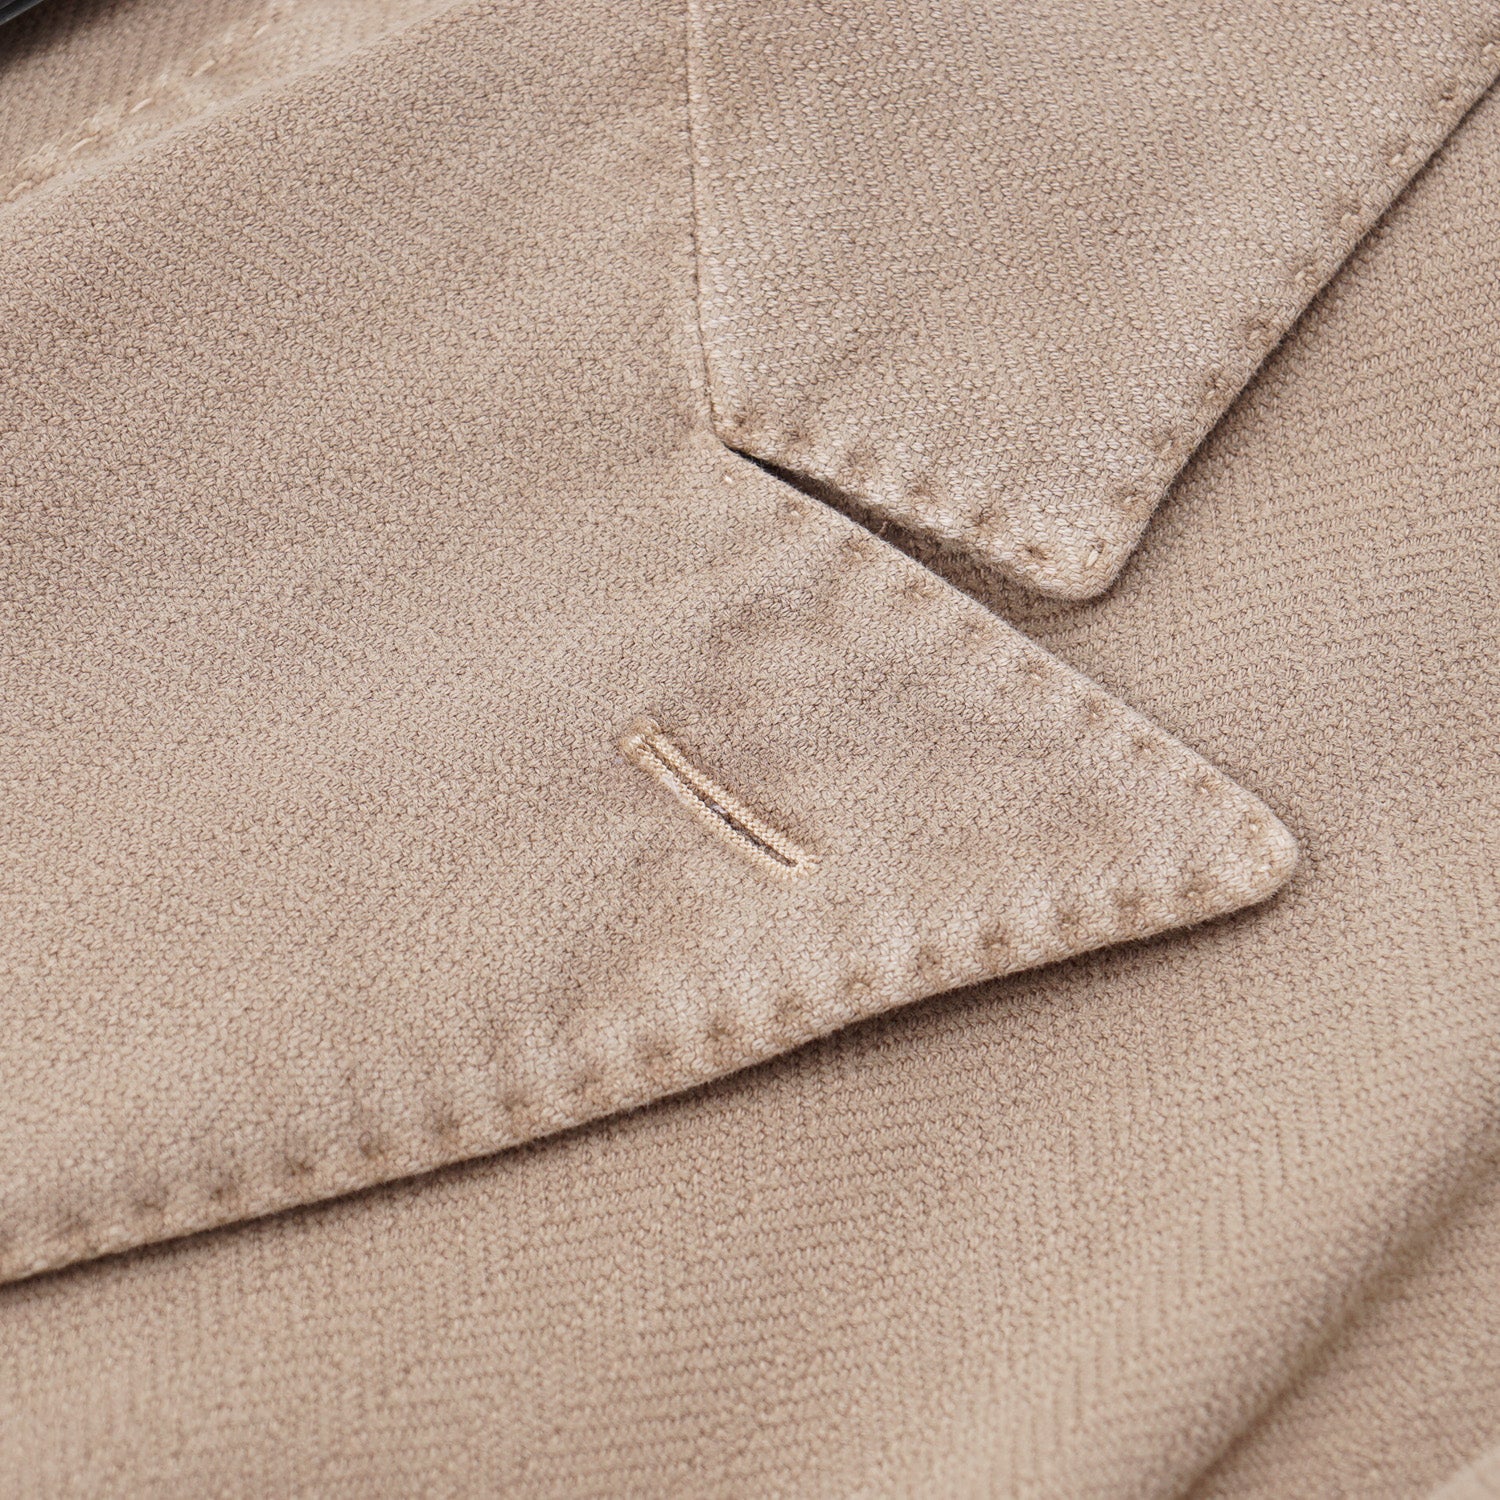 Boglioli Soft Woven Cotton 'K Jacket' Sport Coat - Top Shelf Apparel